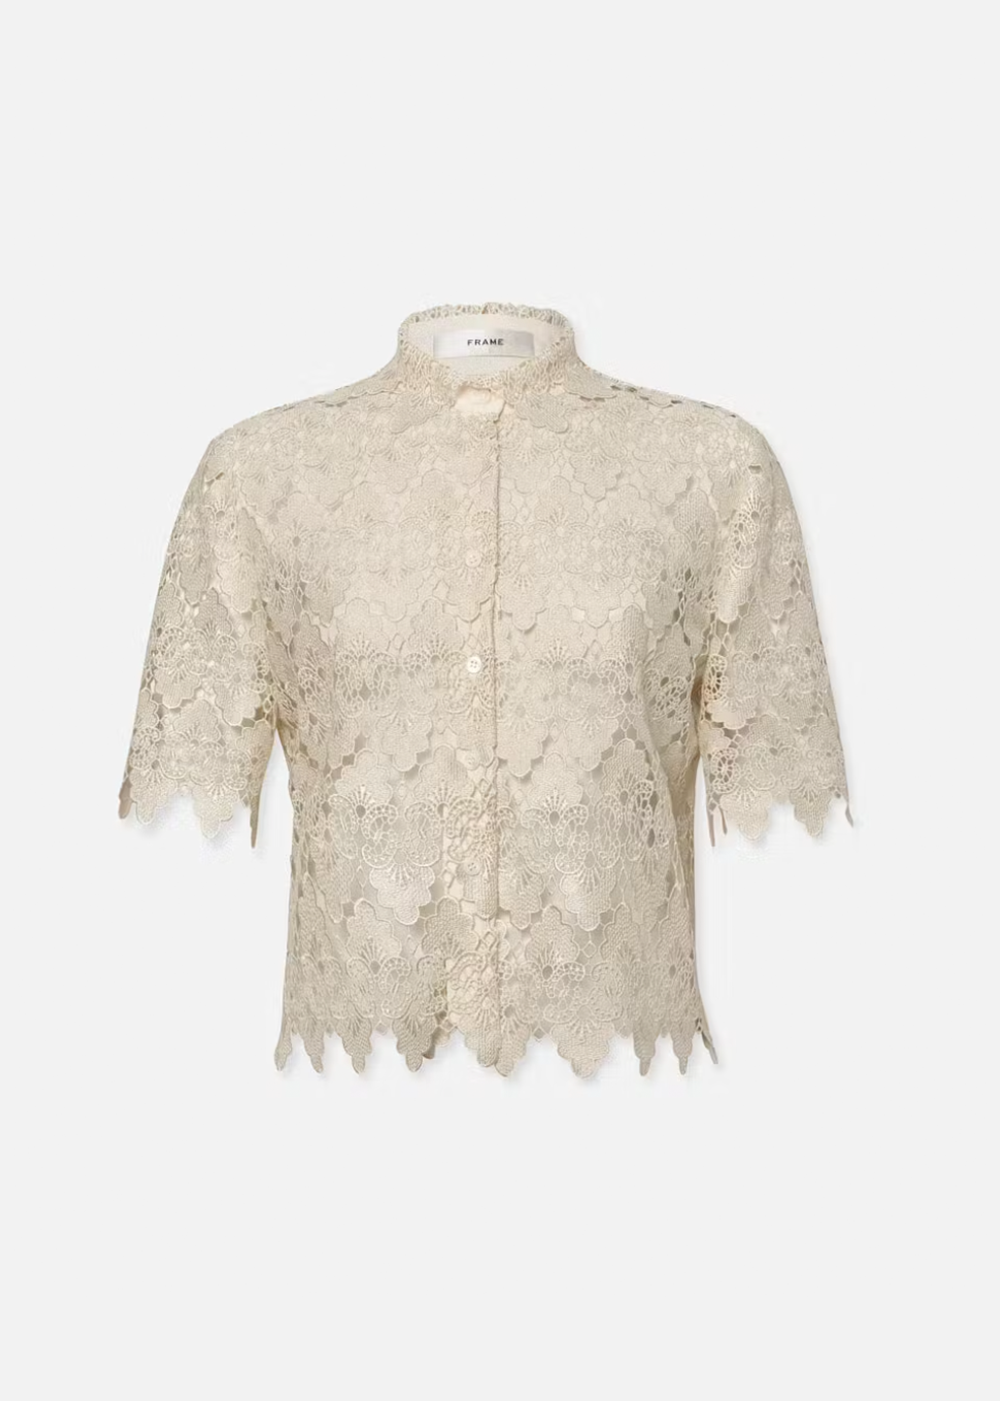 Lace Button Up Shirt - Ecru - FRAME Canada - Danali